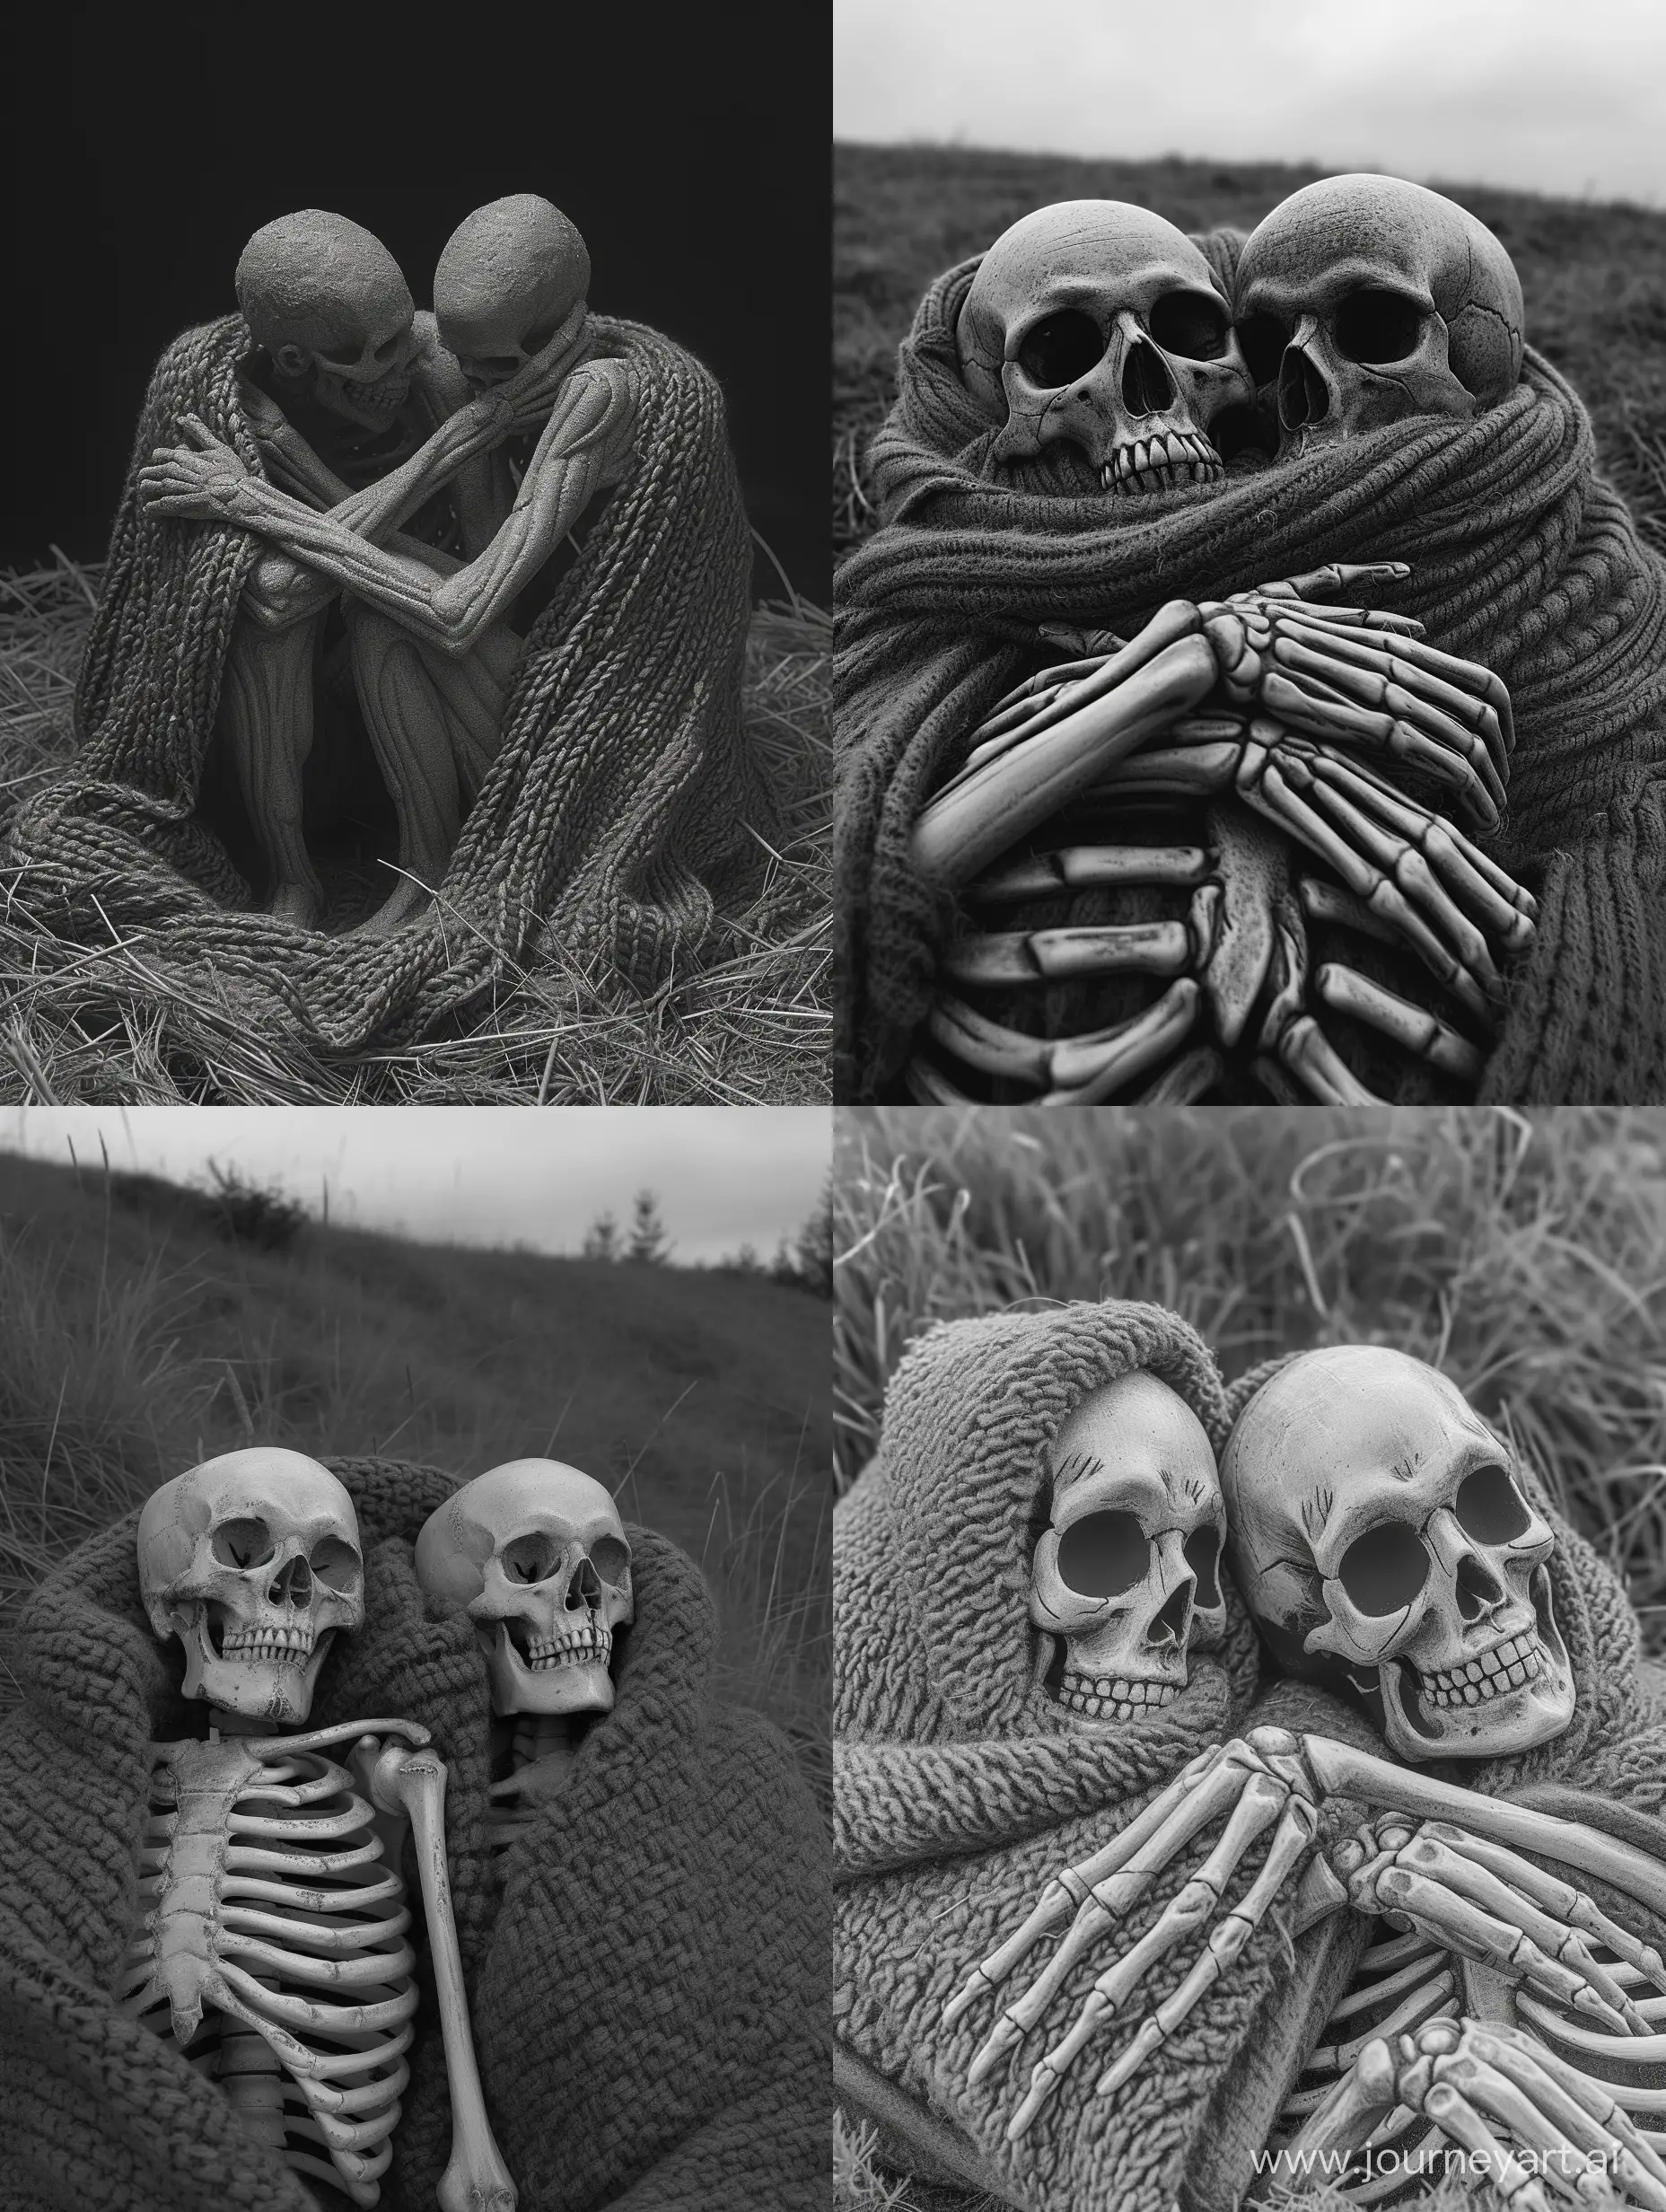 Embraced-Skeletons-in-a-Dark-Field-Intertwined-Figures-Wrapped-in-Wool-Blanket